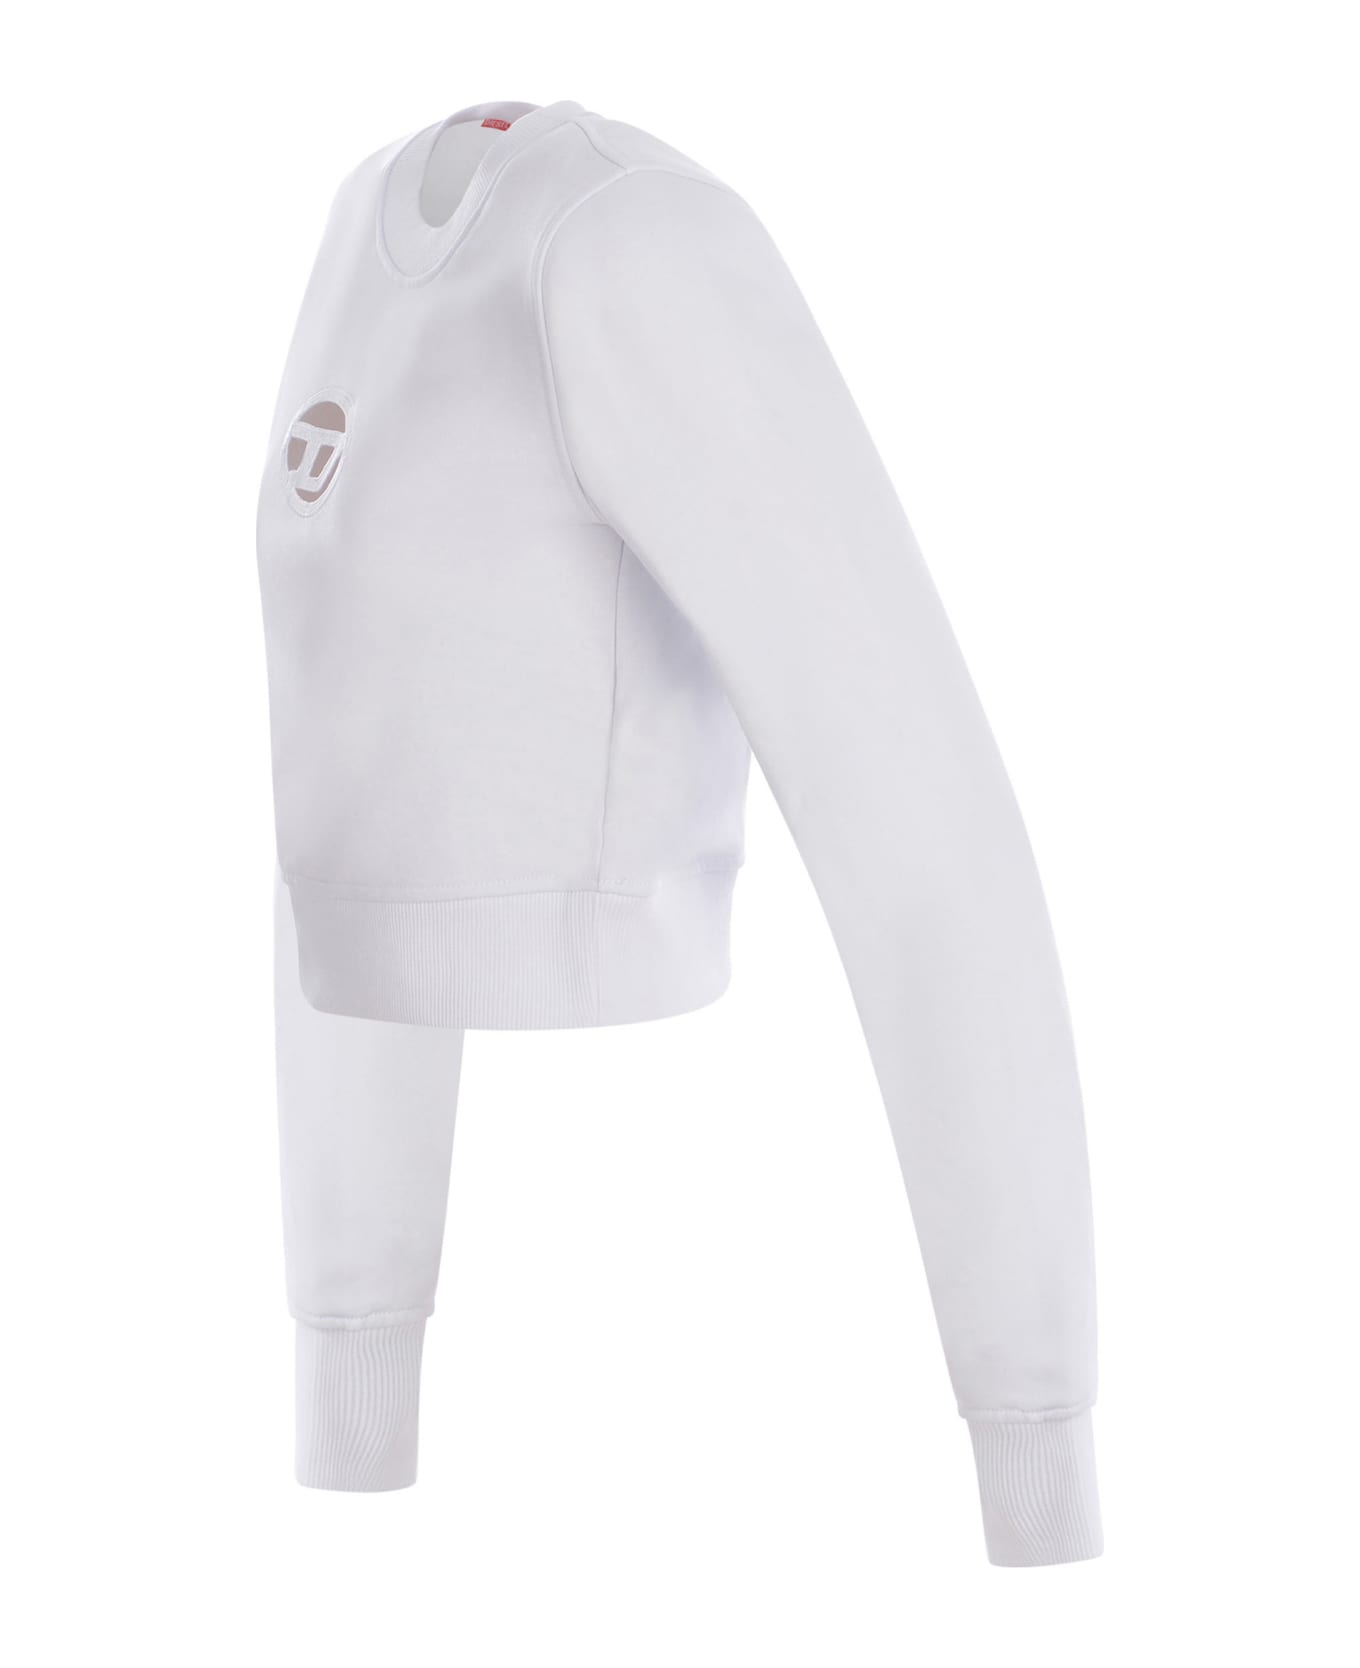 Diesel F-slimmy-od Felpa White Cropped Sweatshirt With Cut-out Oval-d - F Slimmy Od - White フリース